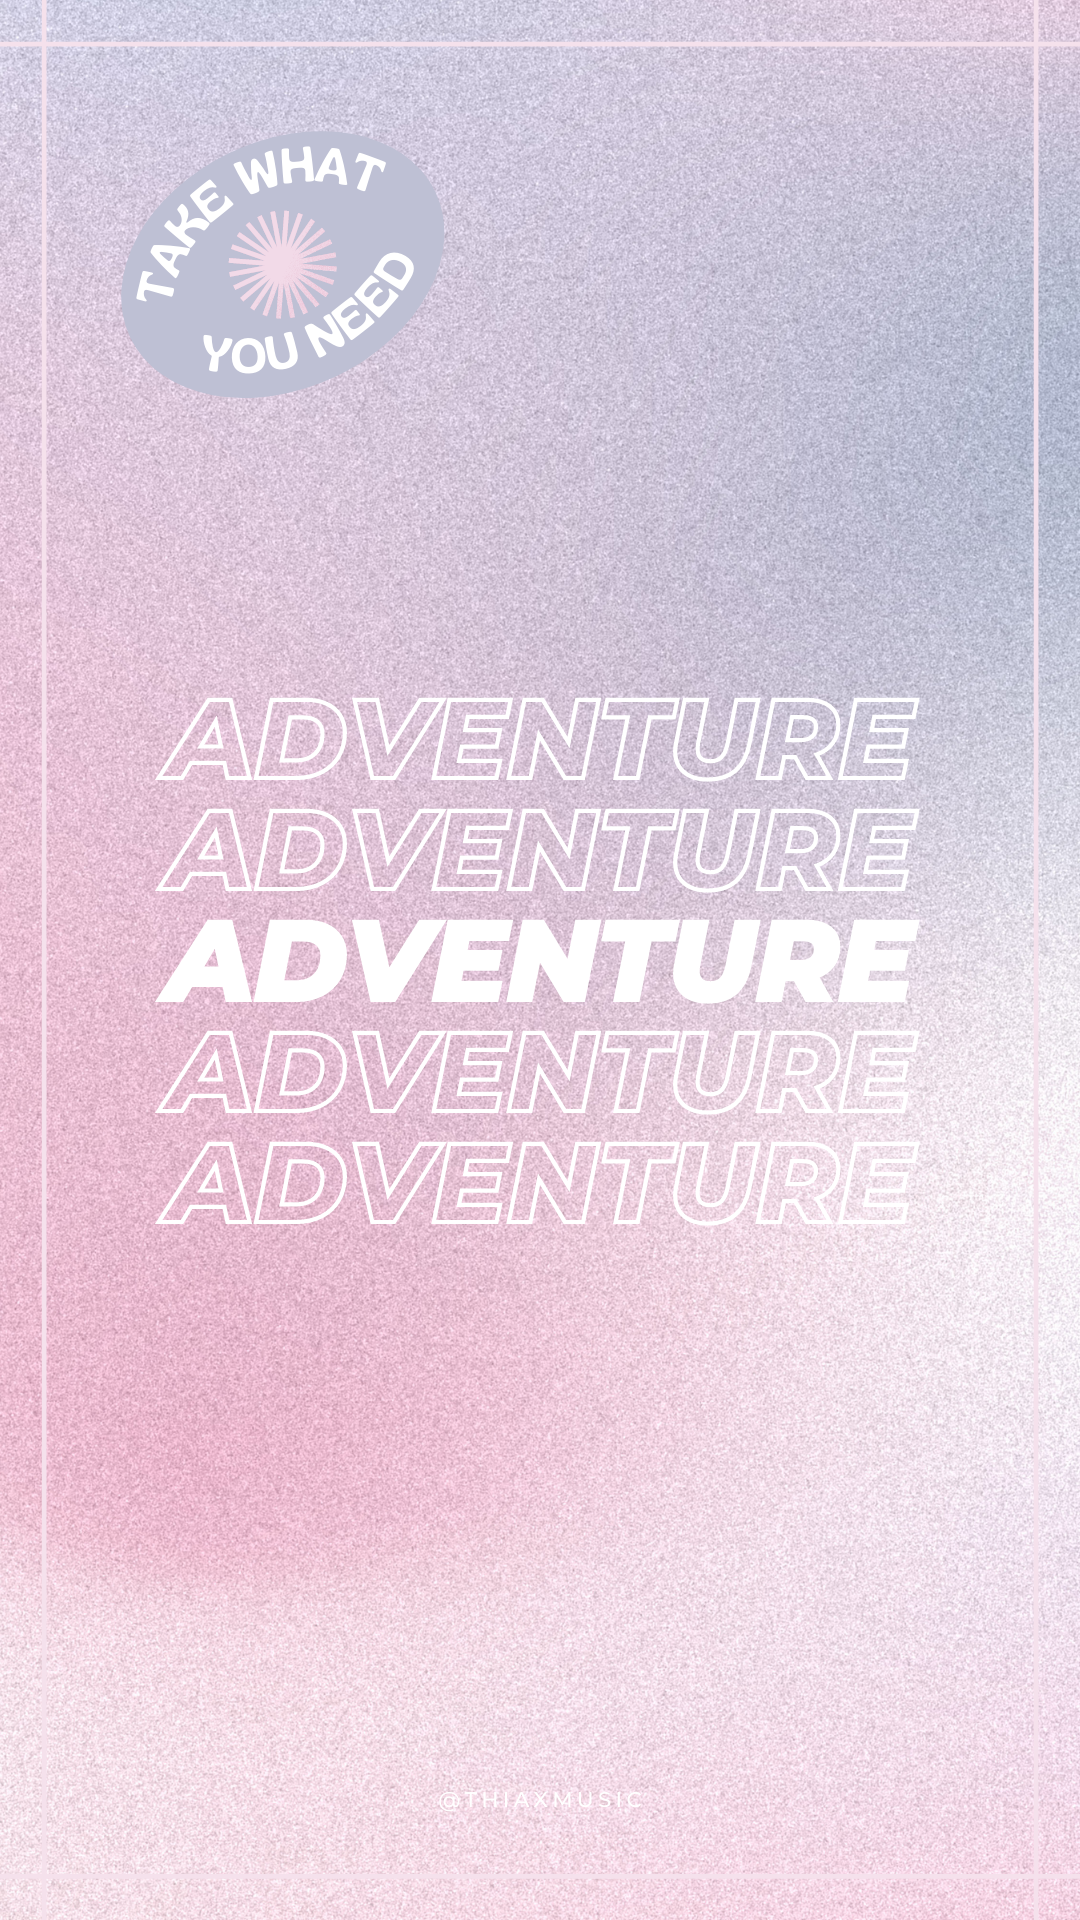 12 Adventure.png